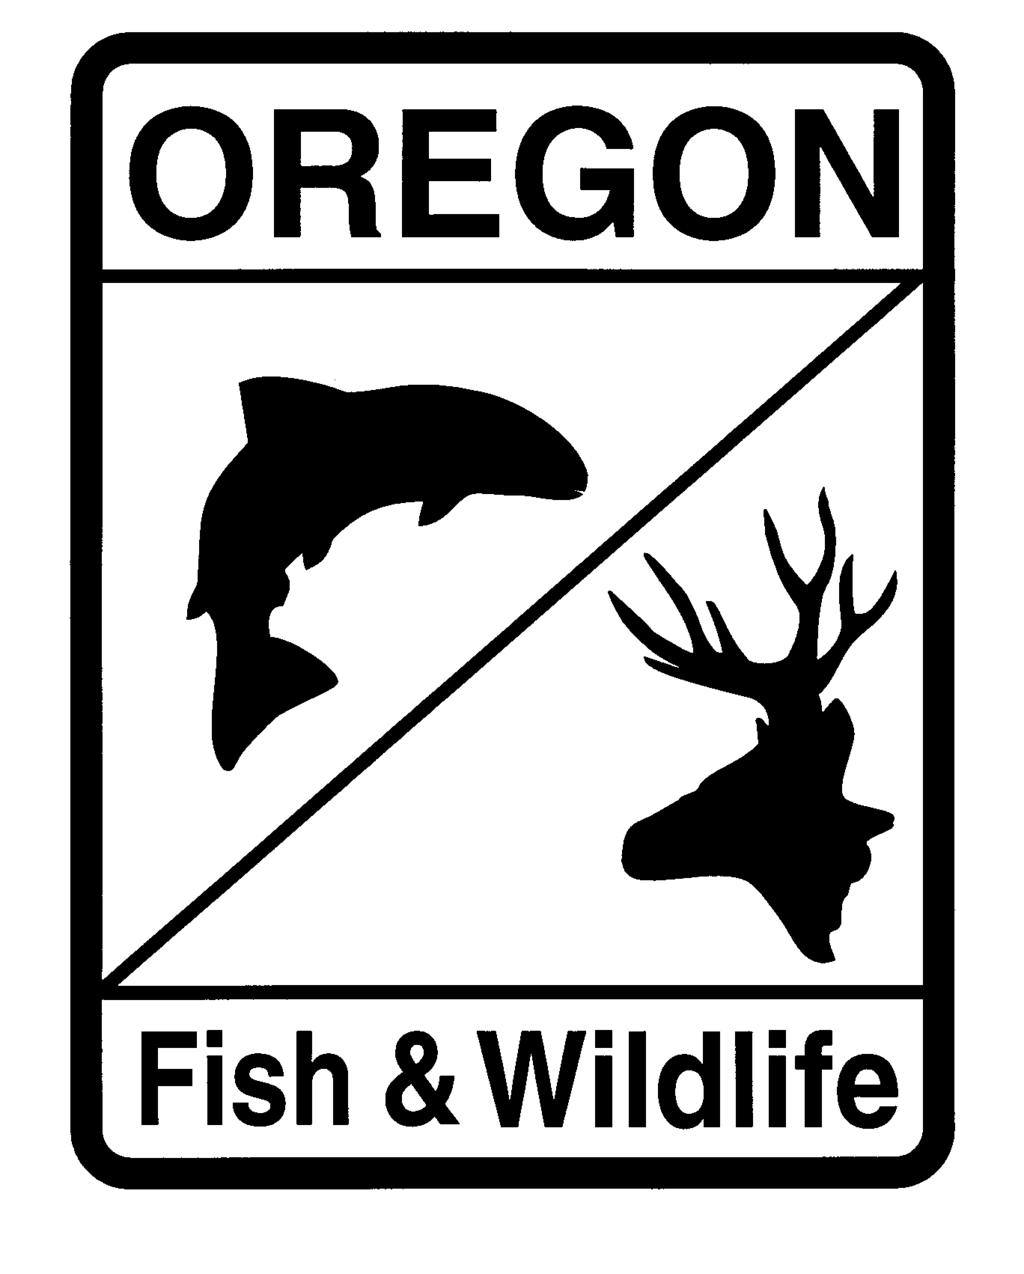 MEMORANDUM Oregon Department of Fish and Wildlife Date: January 18, 2019 To: From: Oregon Fish and Wildlife Commission Greg Apke, ODFW Statewide Fish Passage Program Coordinator Tom Murtagh, North